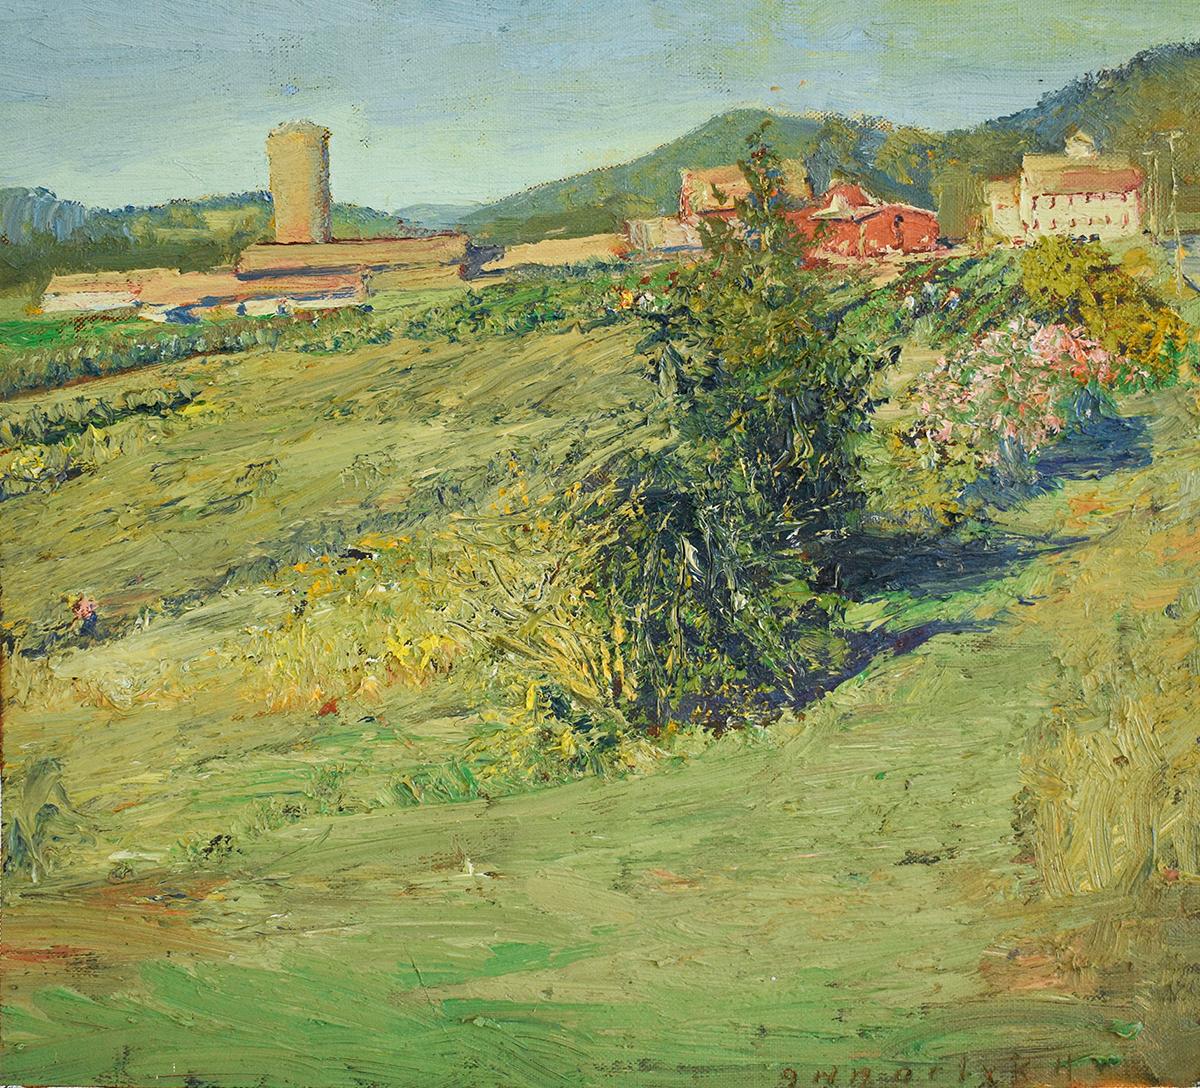 #5712 Gardenworks: Impressionistic En Plein Air Landscape Painting of Rural Farm